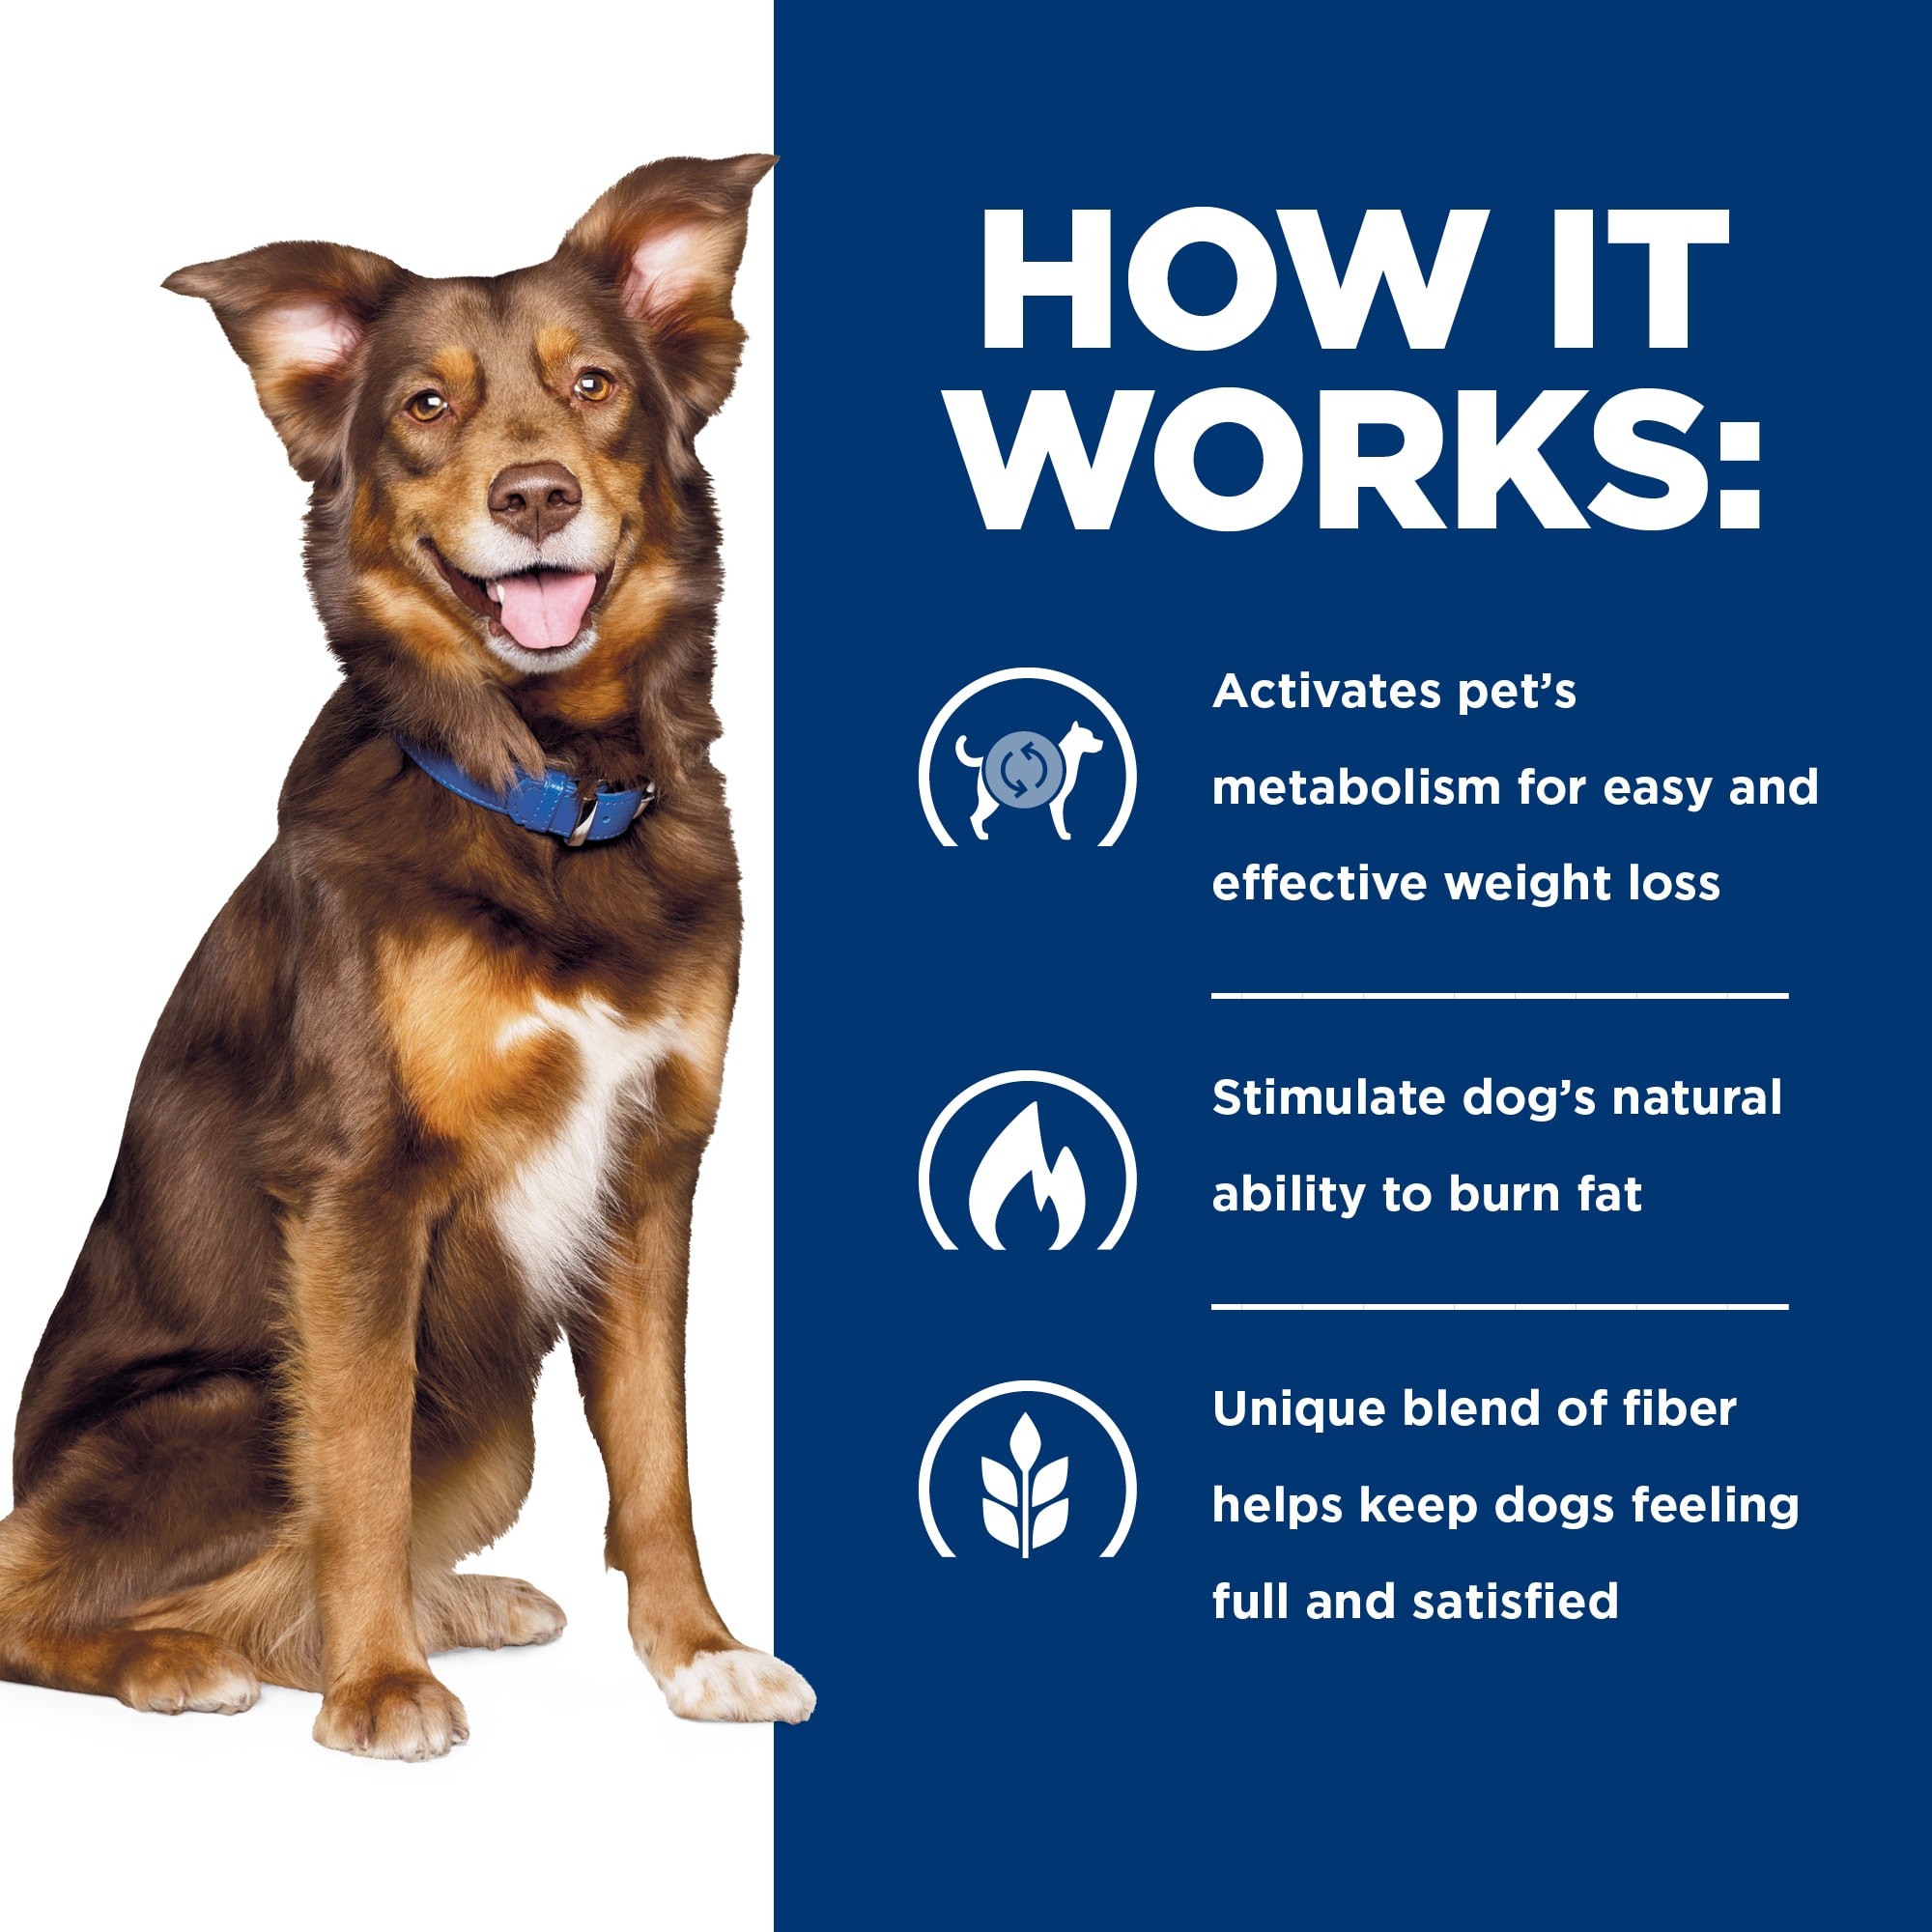 Hill's Prescription Diet Canine Metabolic 4 kg, Metabolic